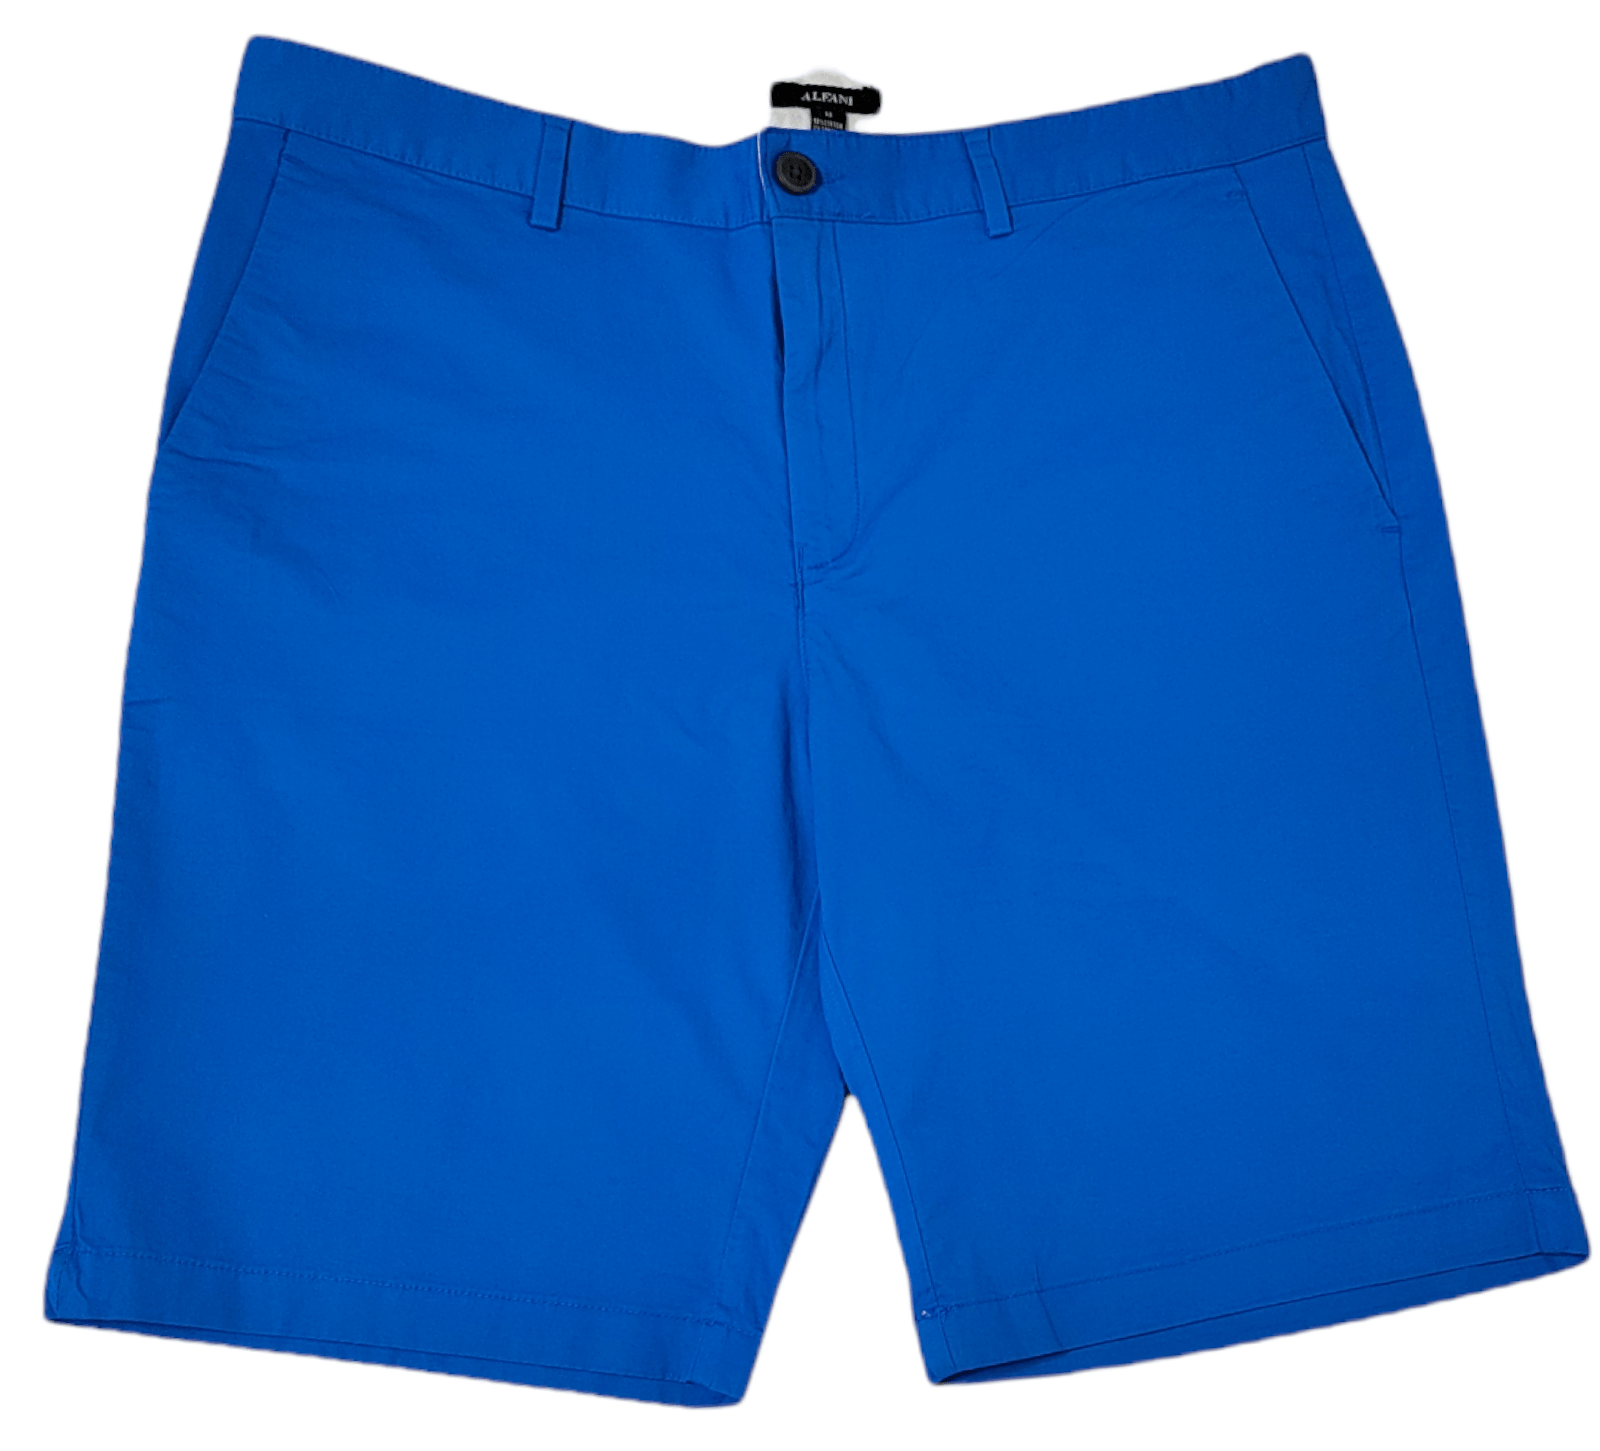 ElOutlet - Men Summer Men Shorts size 33 Men Shorts - Light Blue